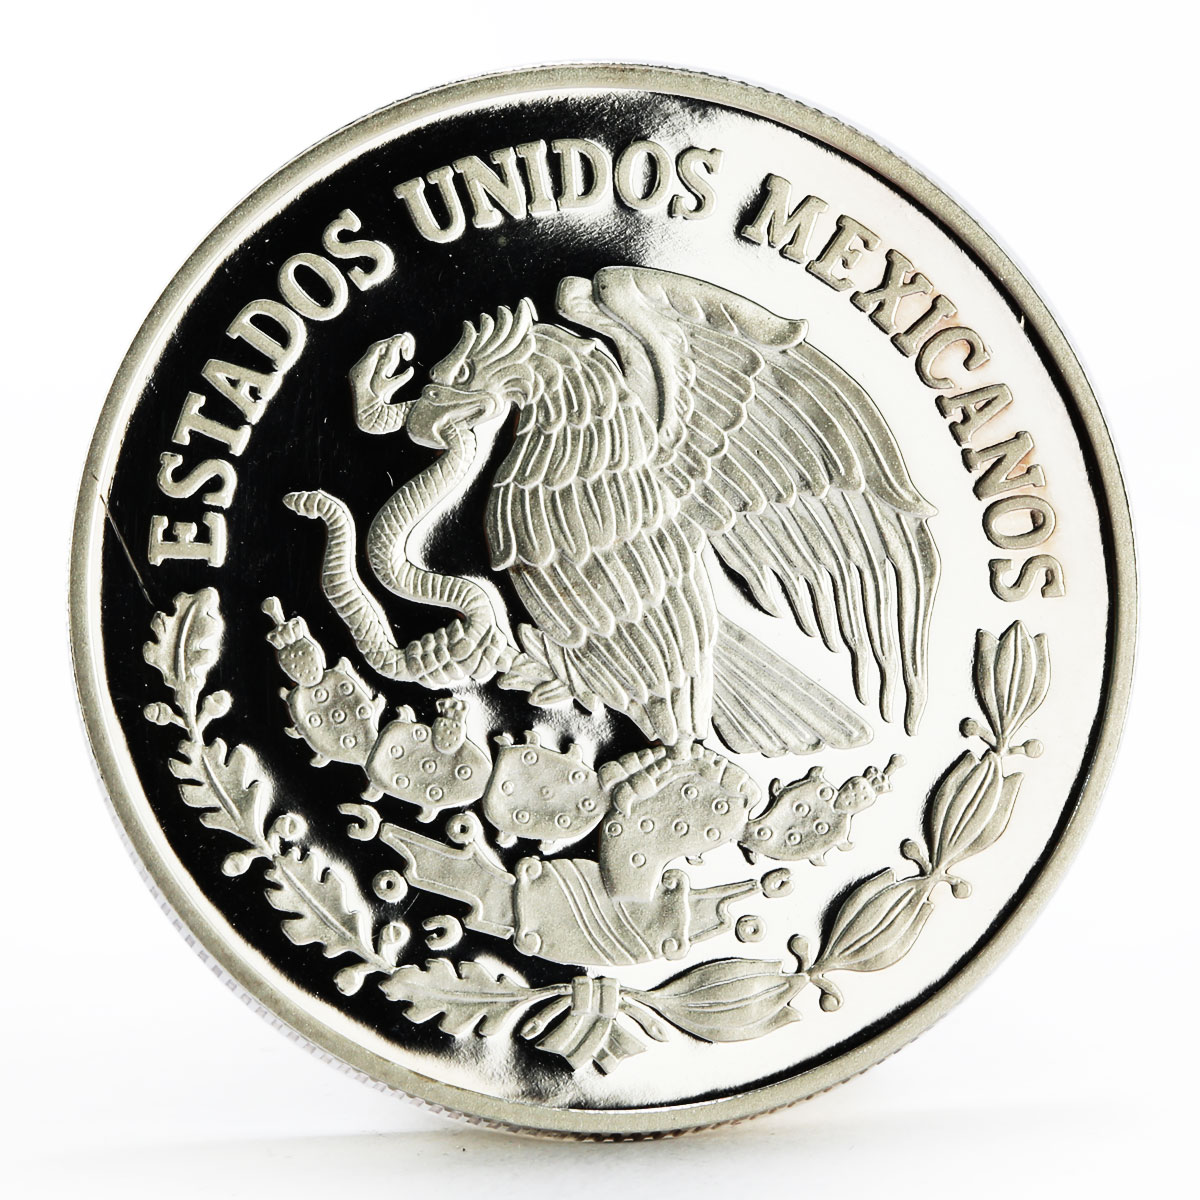 Mexico 5 pesos 2006 World Cup Soccer Games Football proof silver coin ...